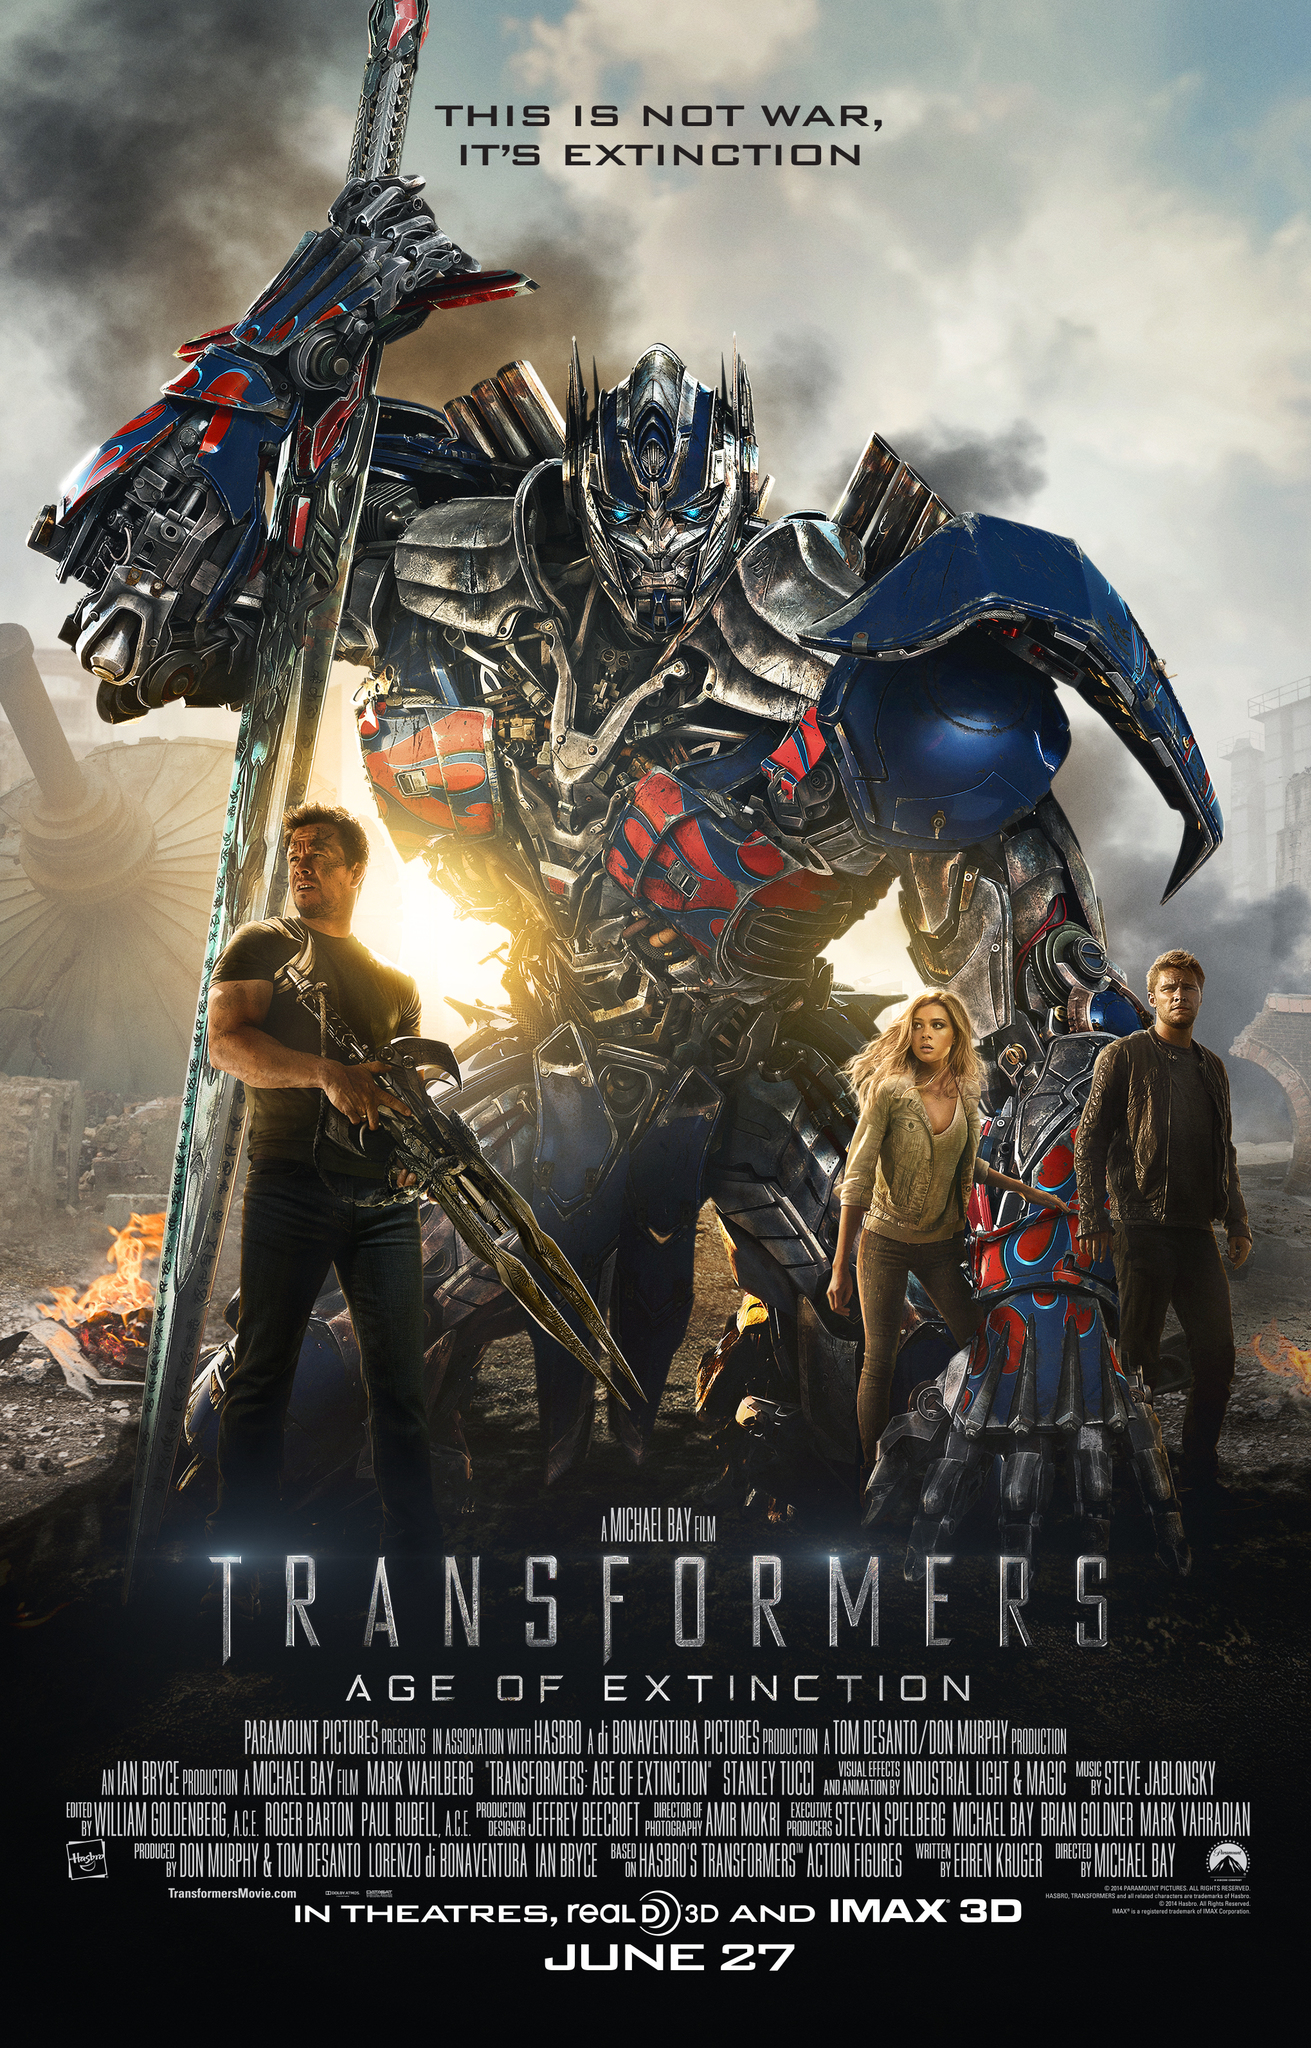 Transformers 4 Age of Extinction (2014) ทรานส์ฟอร์เมอร์ส มหาวิบัติยุคสูญพันธุ์ Mark Wahlberg